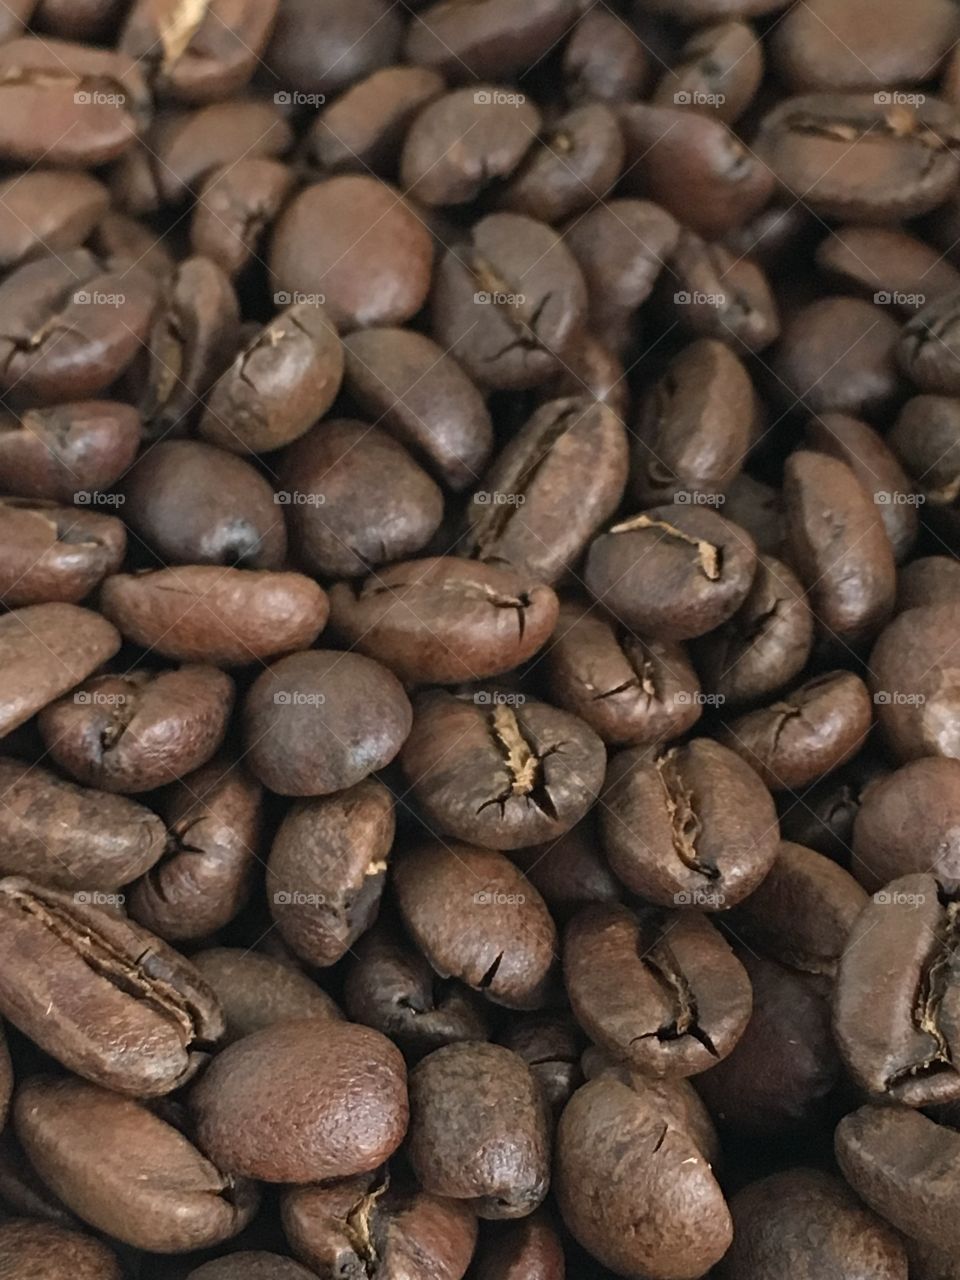 Fresh-roasted coffee